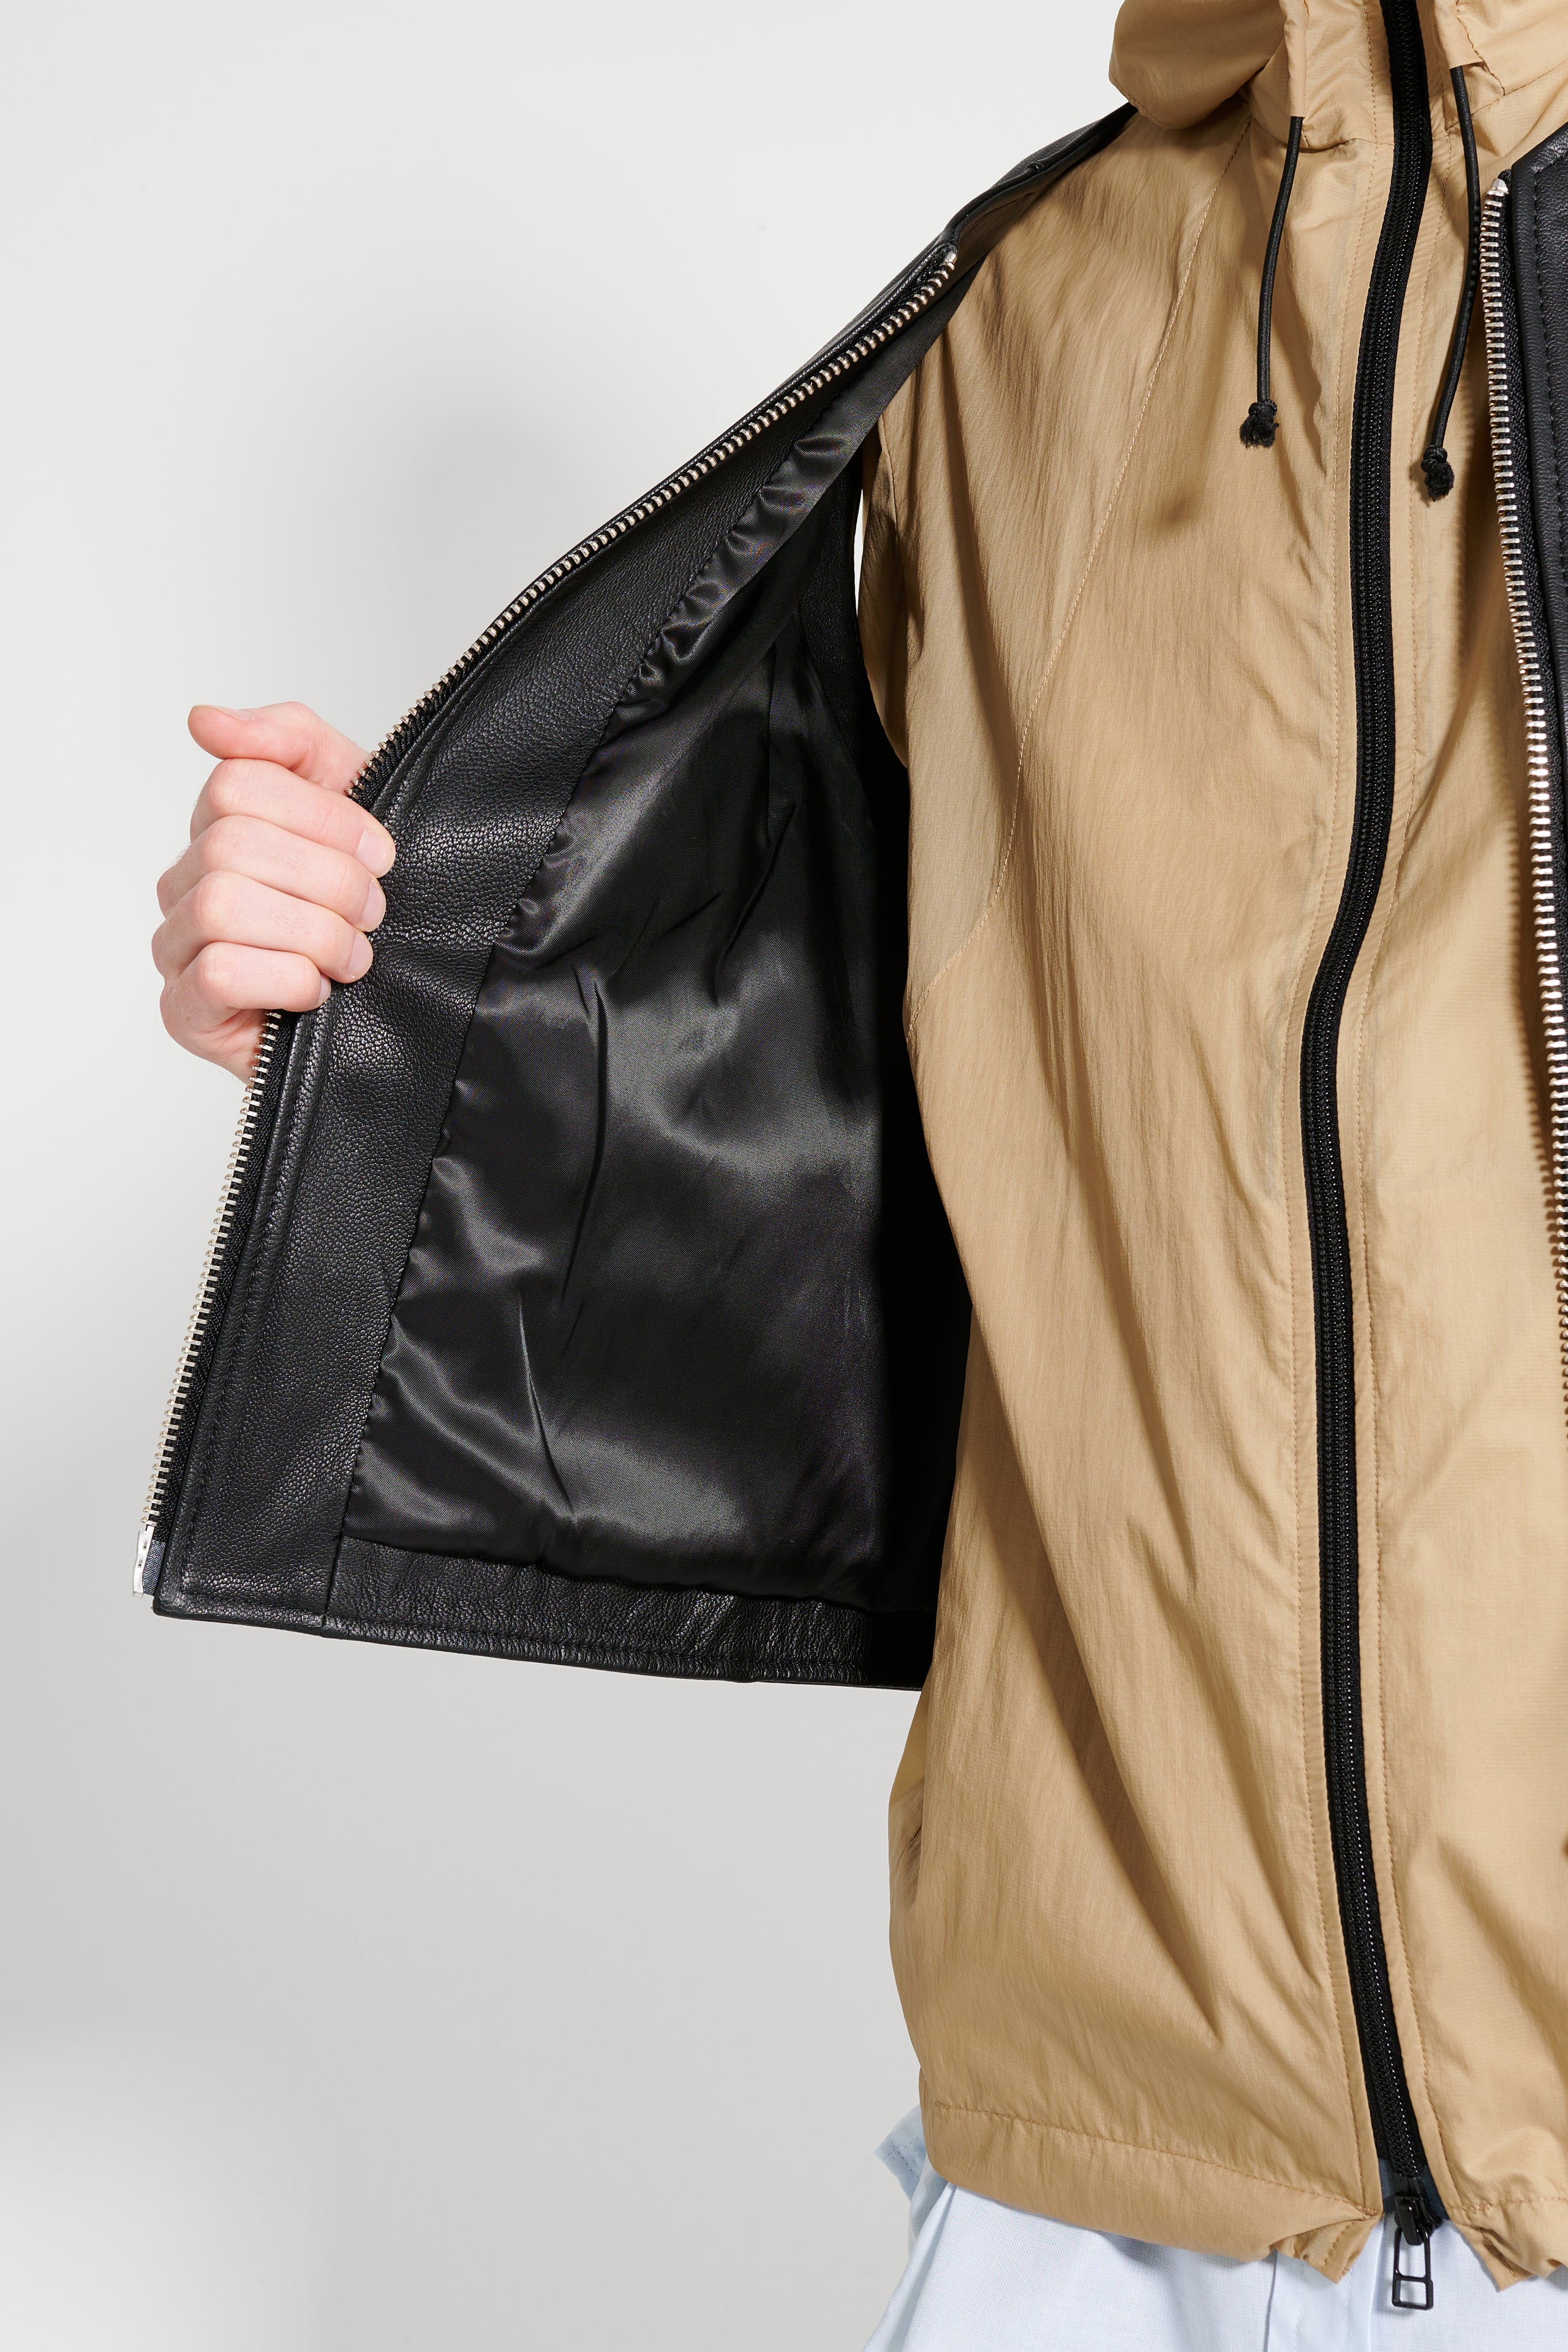 TRÈS BIEN everywear Panelled Leather Vest Leather Black